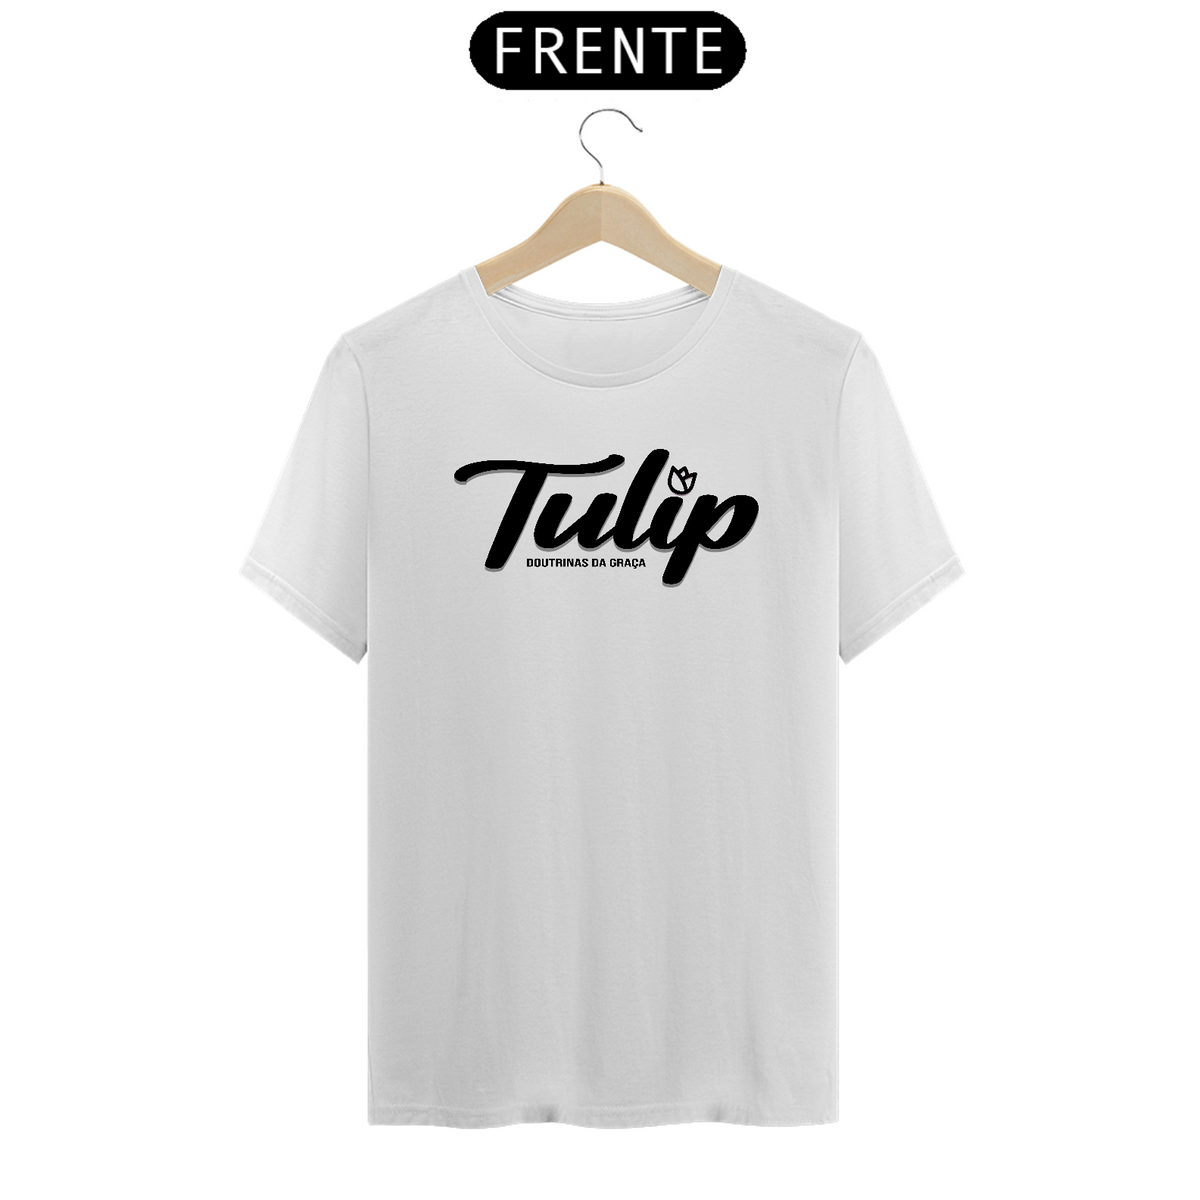 Nome do produto: Camiseta TULIP (cores claras)